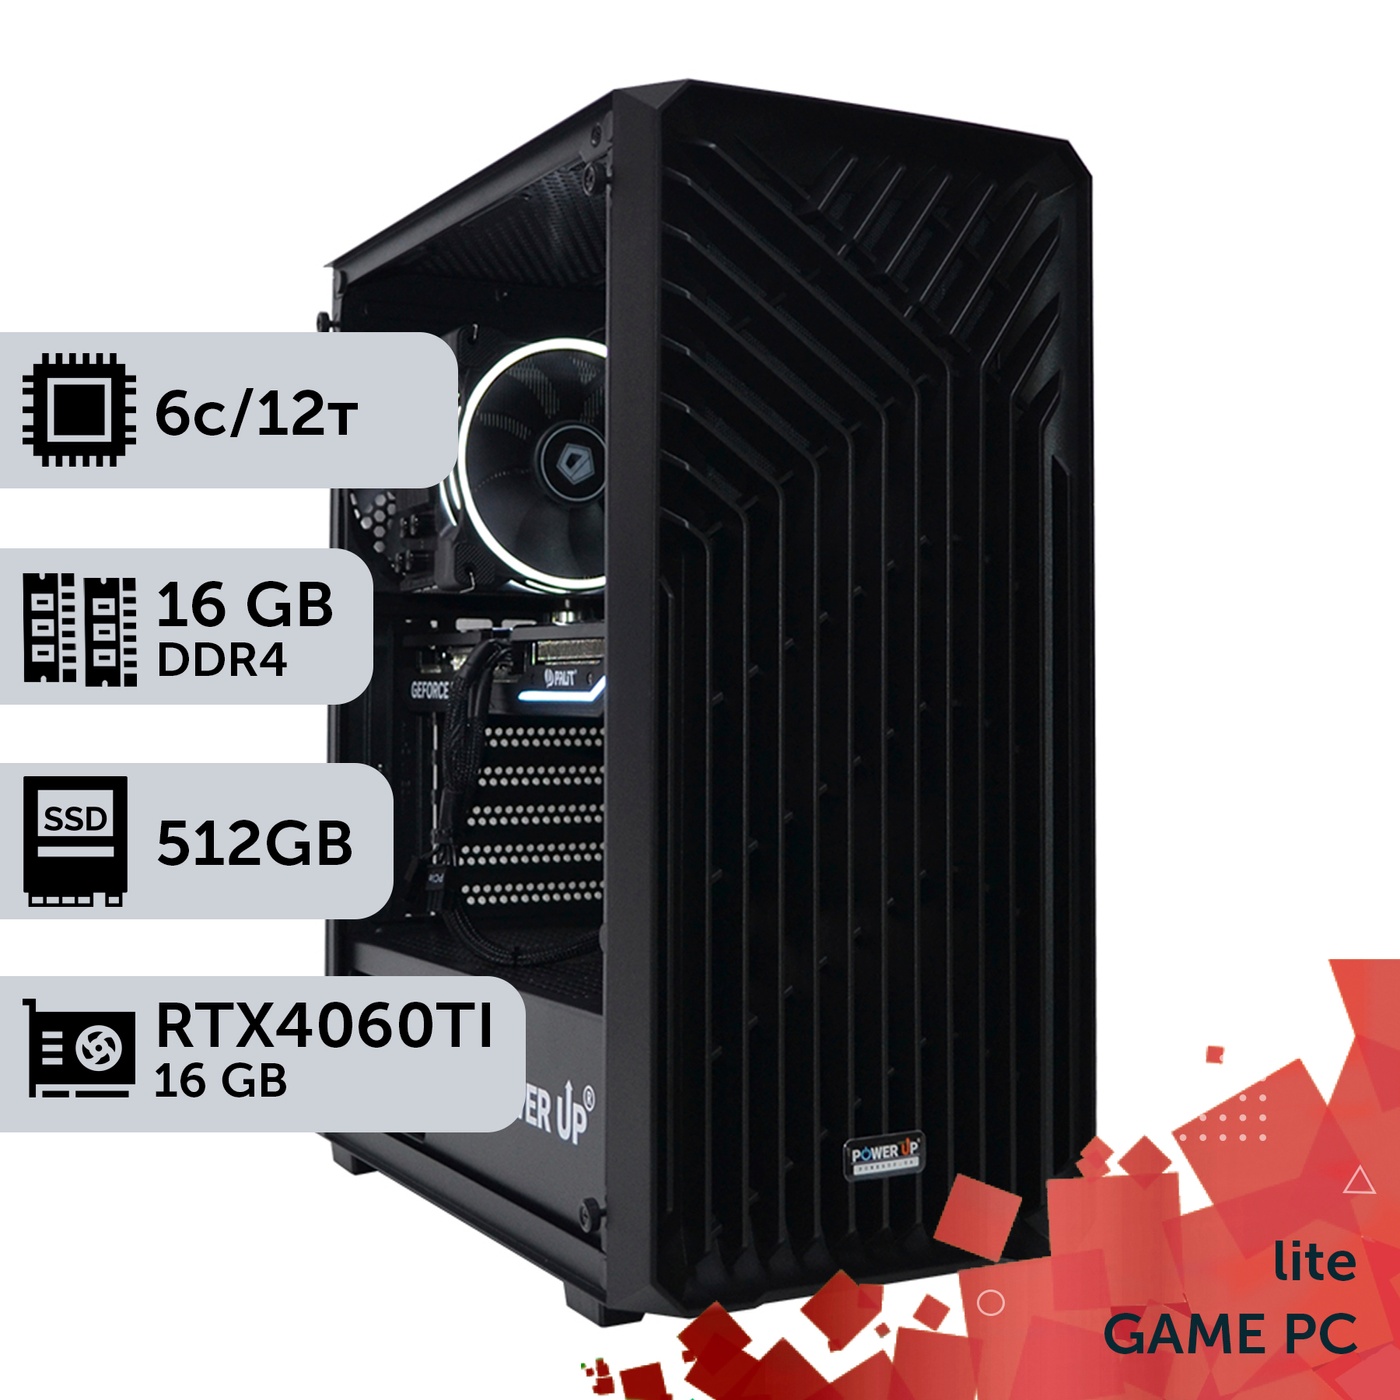 Игровой компьютер GamePC Lite #246 Ryzen 5 4500/16 GB/SSD 512GB/GeForce RTX 4060Ti 16GB